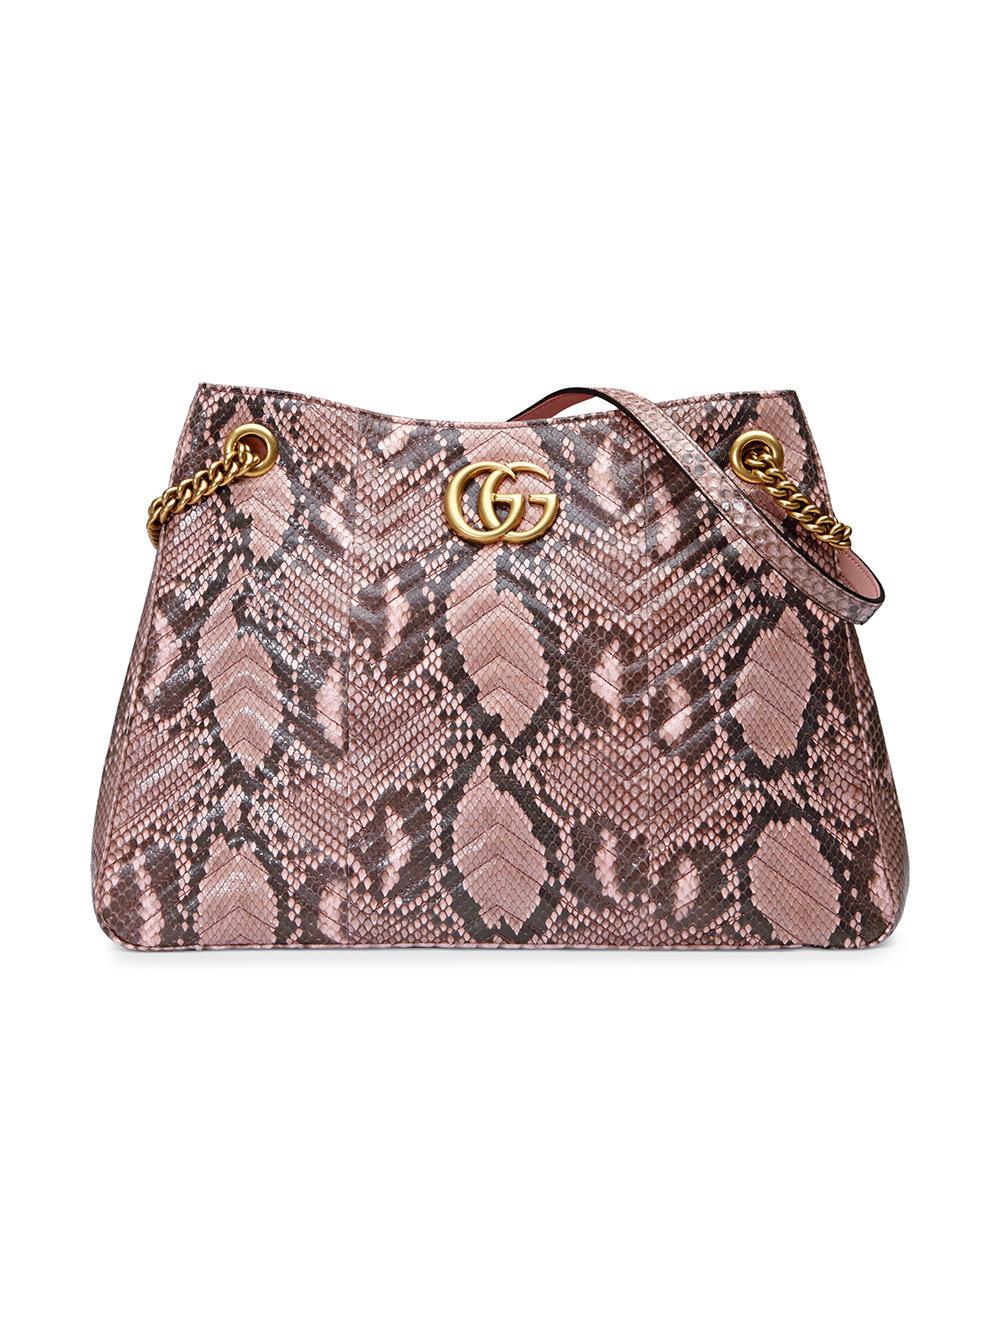 Gucci - Gg Marmont Matelassé Python Shoulder Bag - Women - Leather/microfibre - One Size in Pink ...